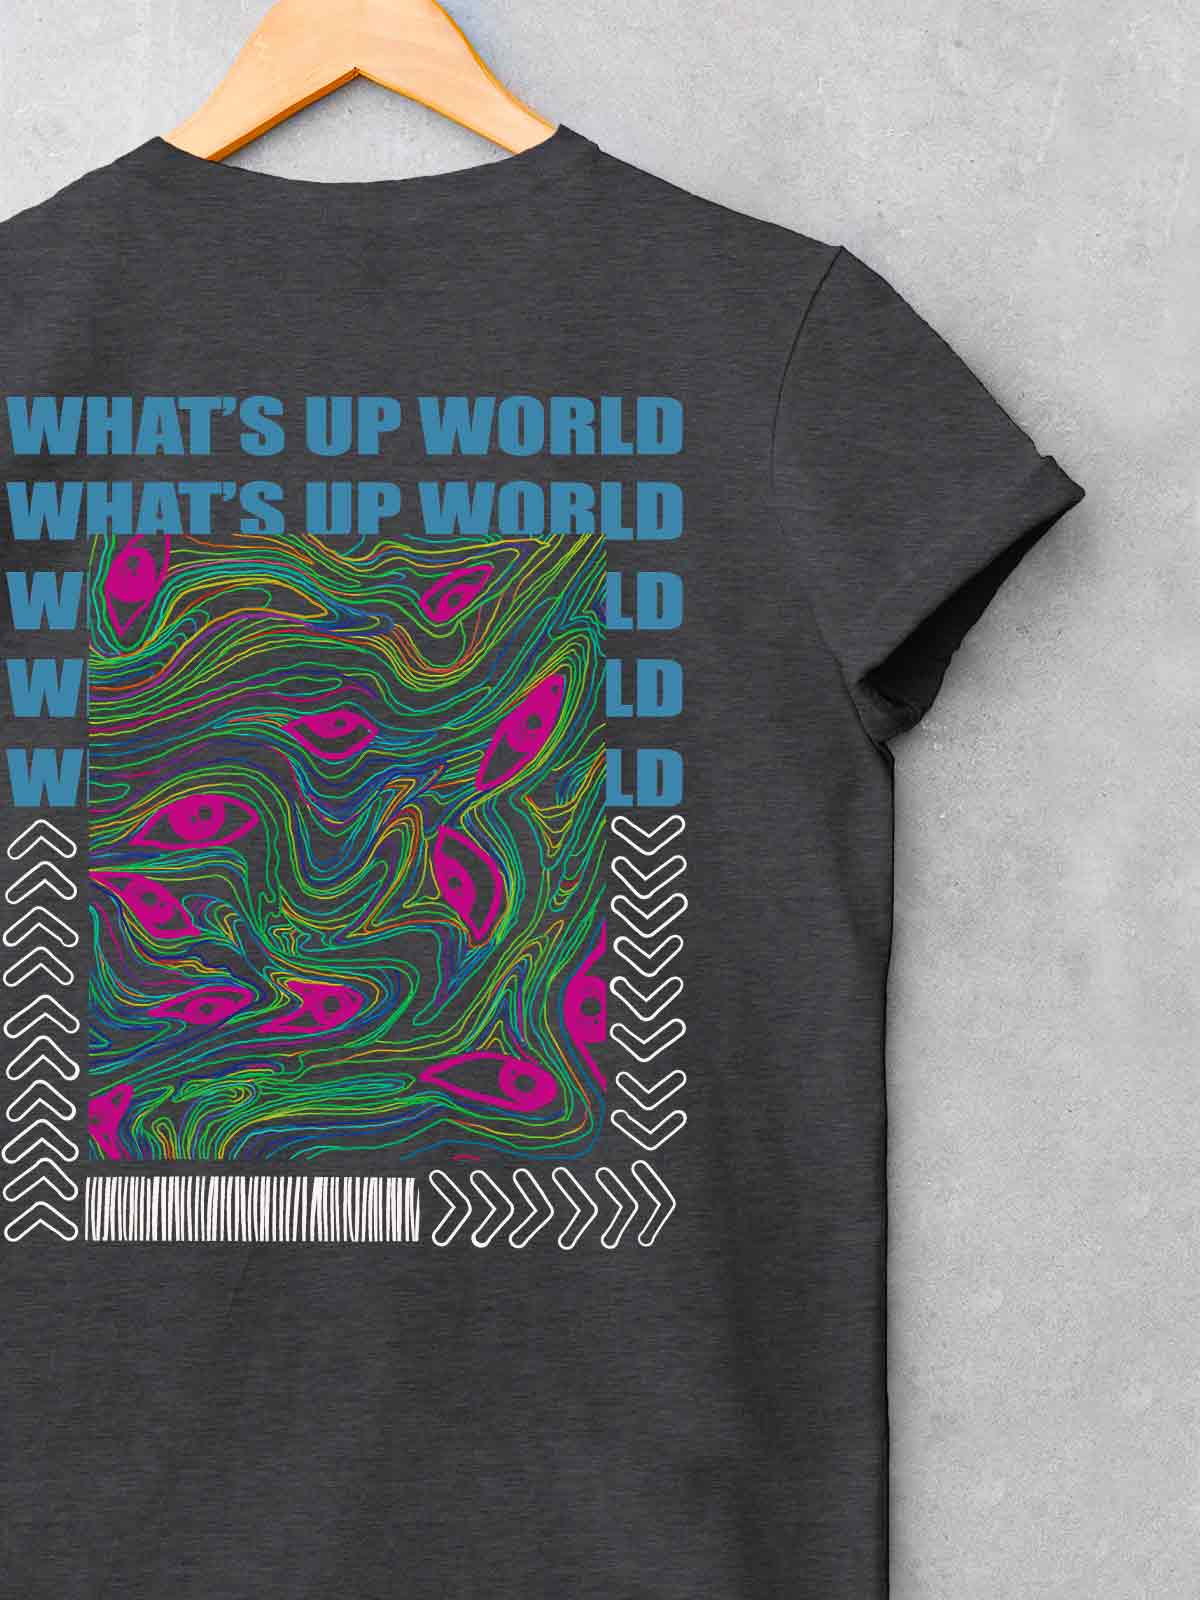 Whats-up-world-backprint-t-shirt-for-men by Ghumakkad